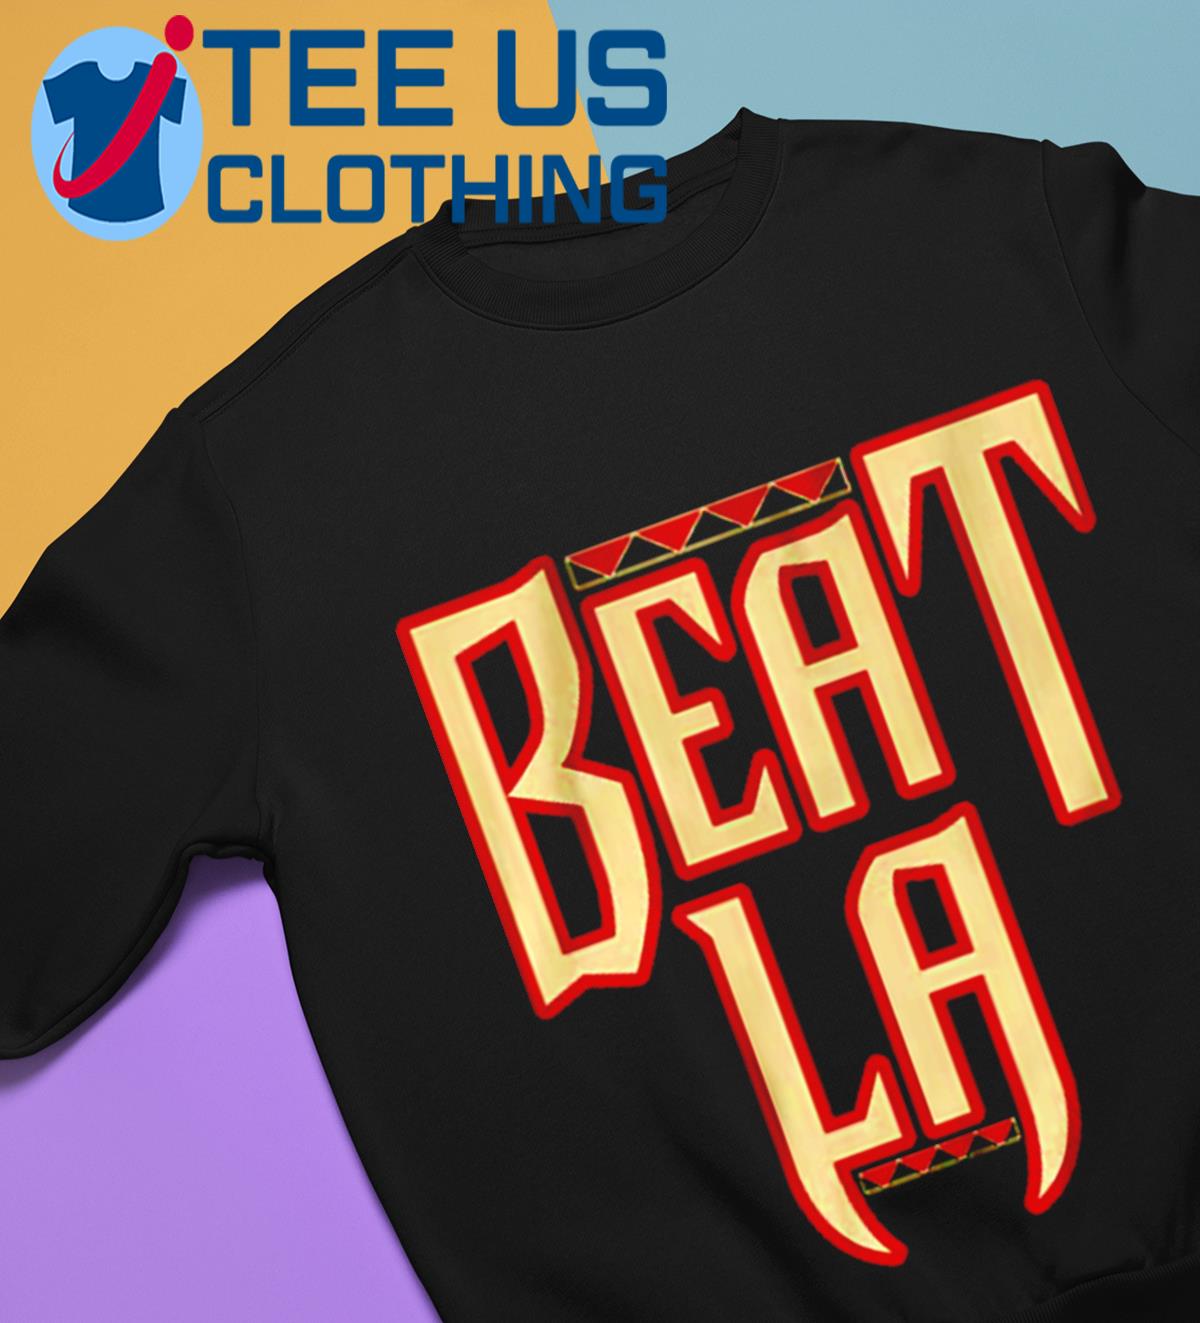 Arizona Diamondbacks Beat LA shirt, hoodie, sweatshirt and tank top